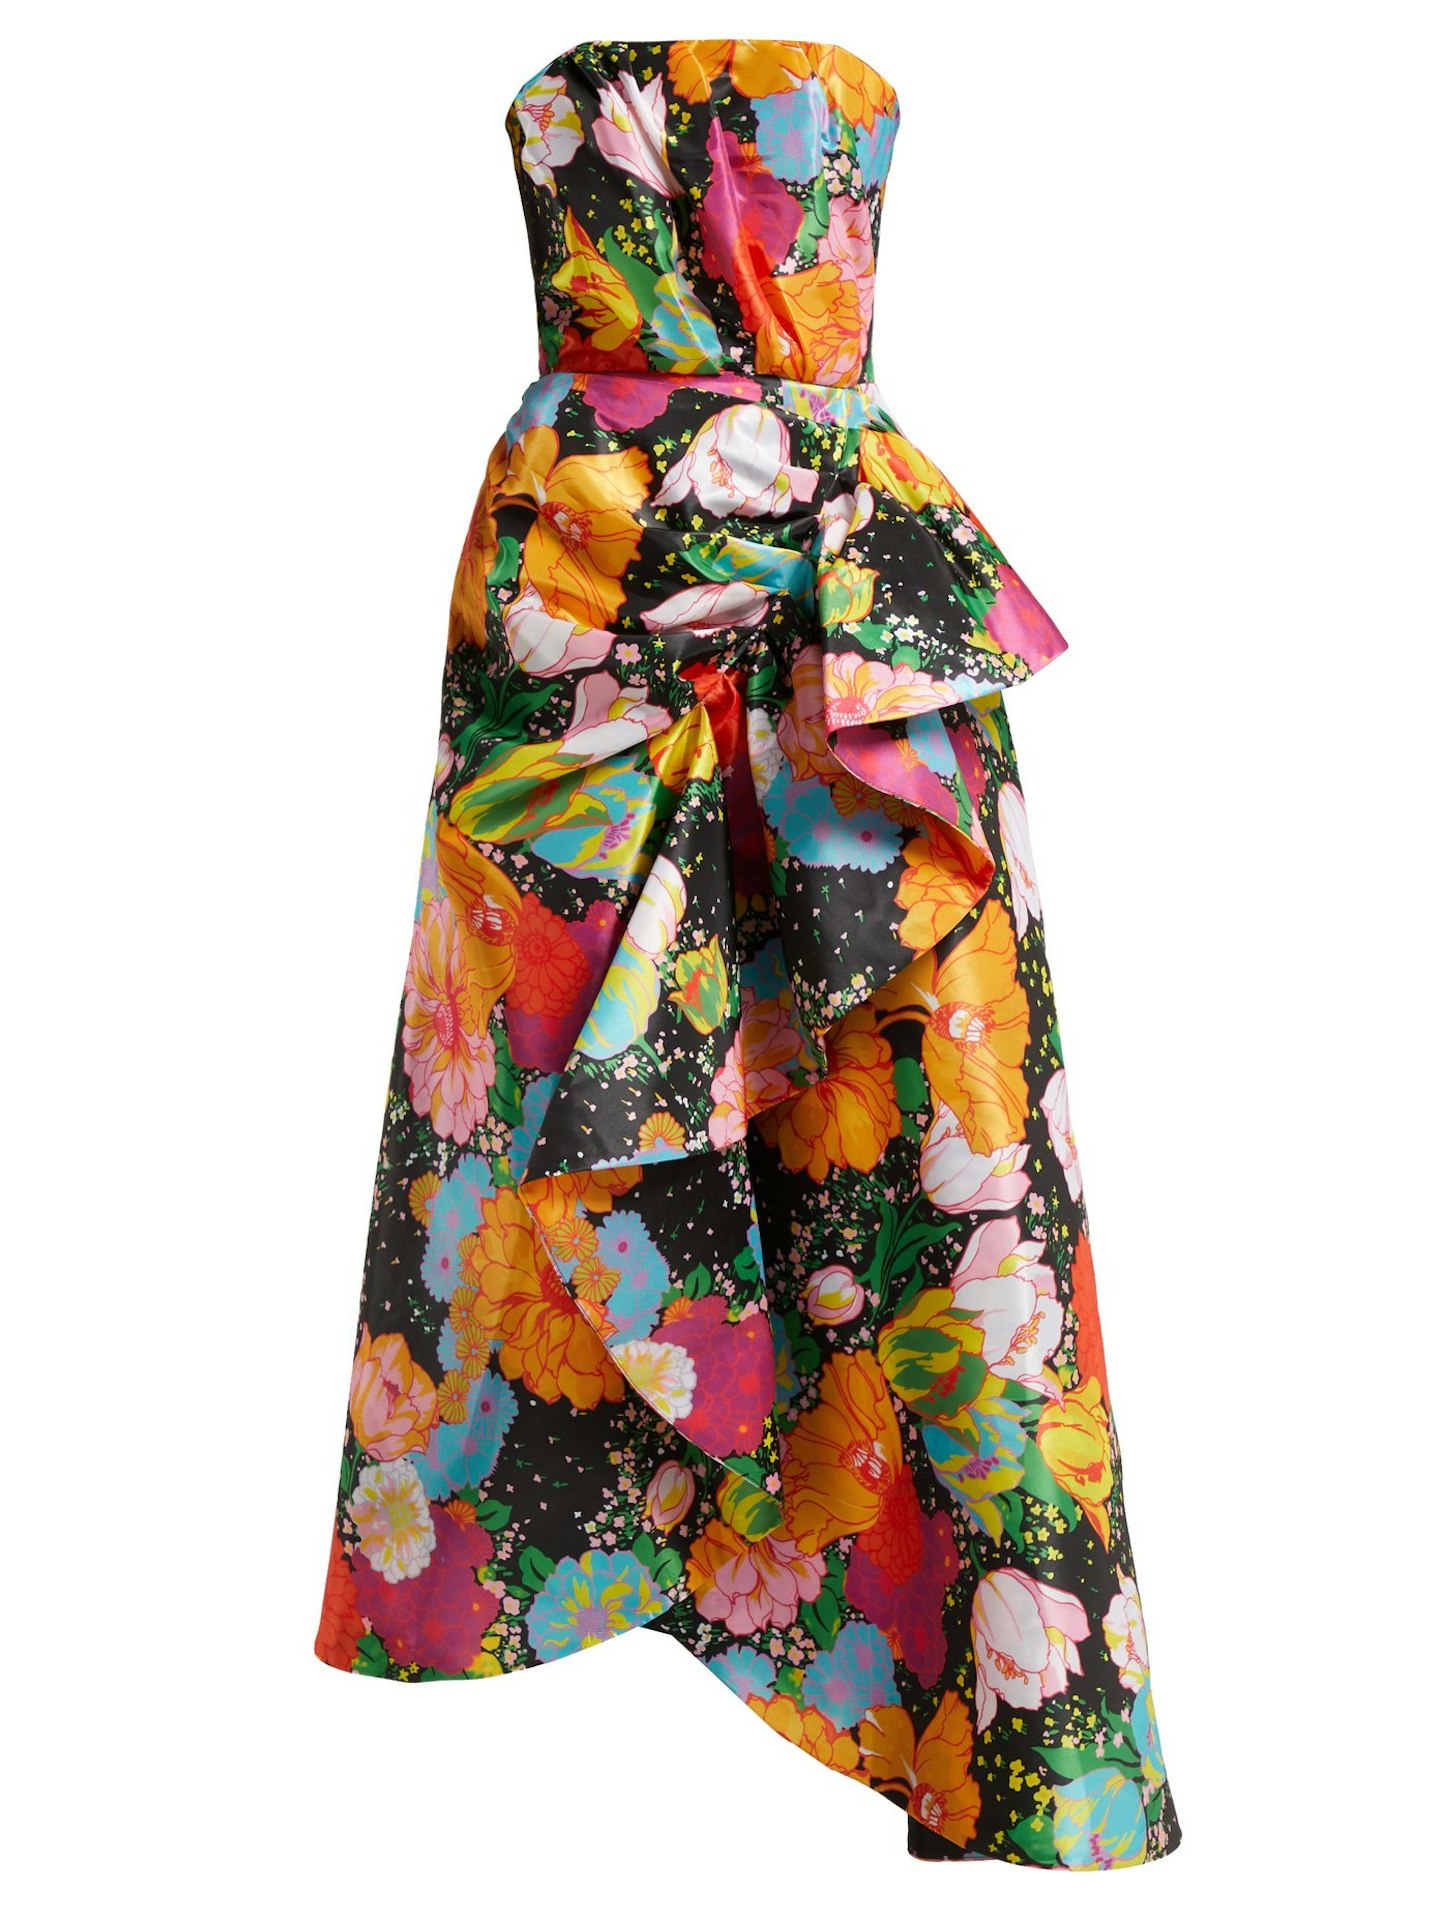 Richard Quinn, Floral-Print Strapless Satin Dress, £2548, Matchesfashion.com